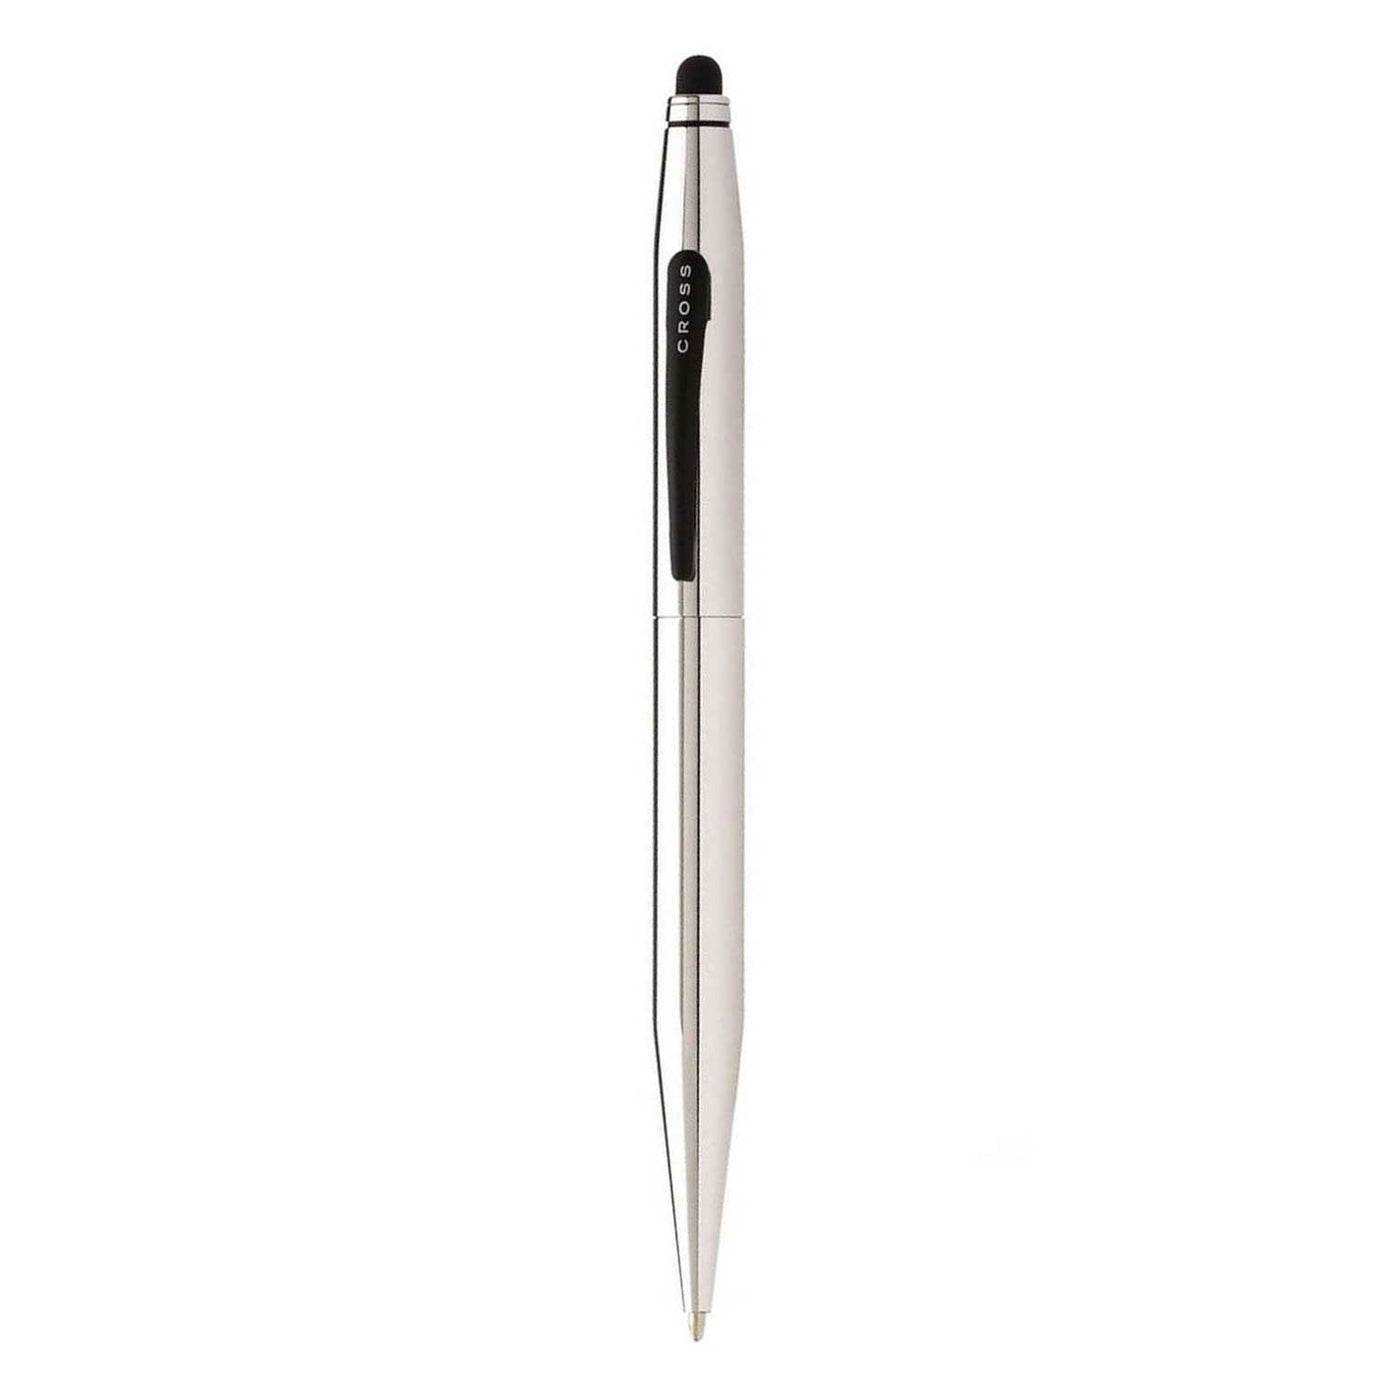 Cross Tech 2 2-In-1 Multi Function Pen With Stylus, Chrome